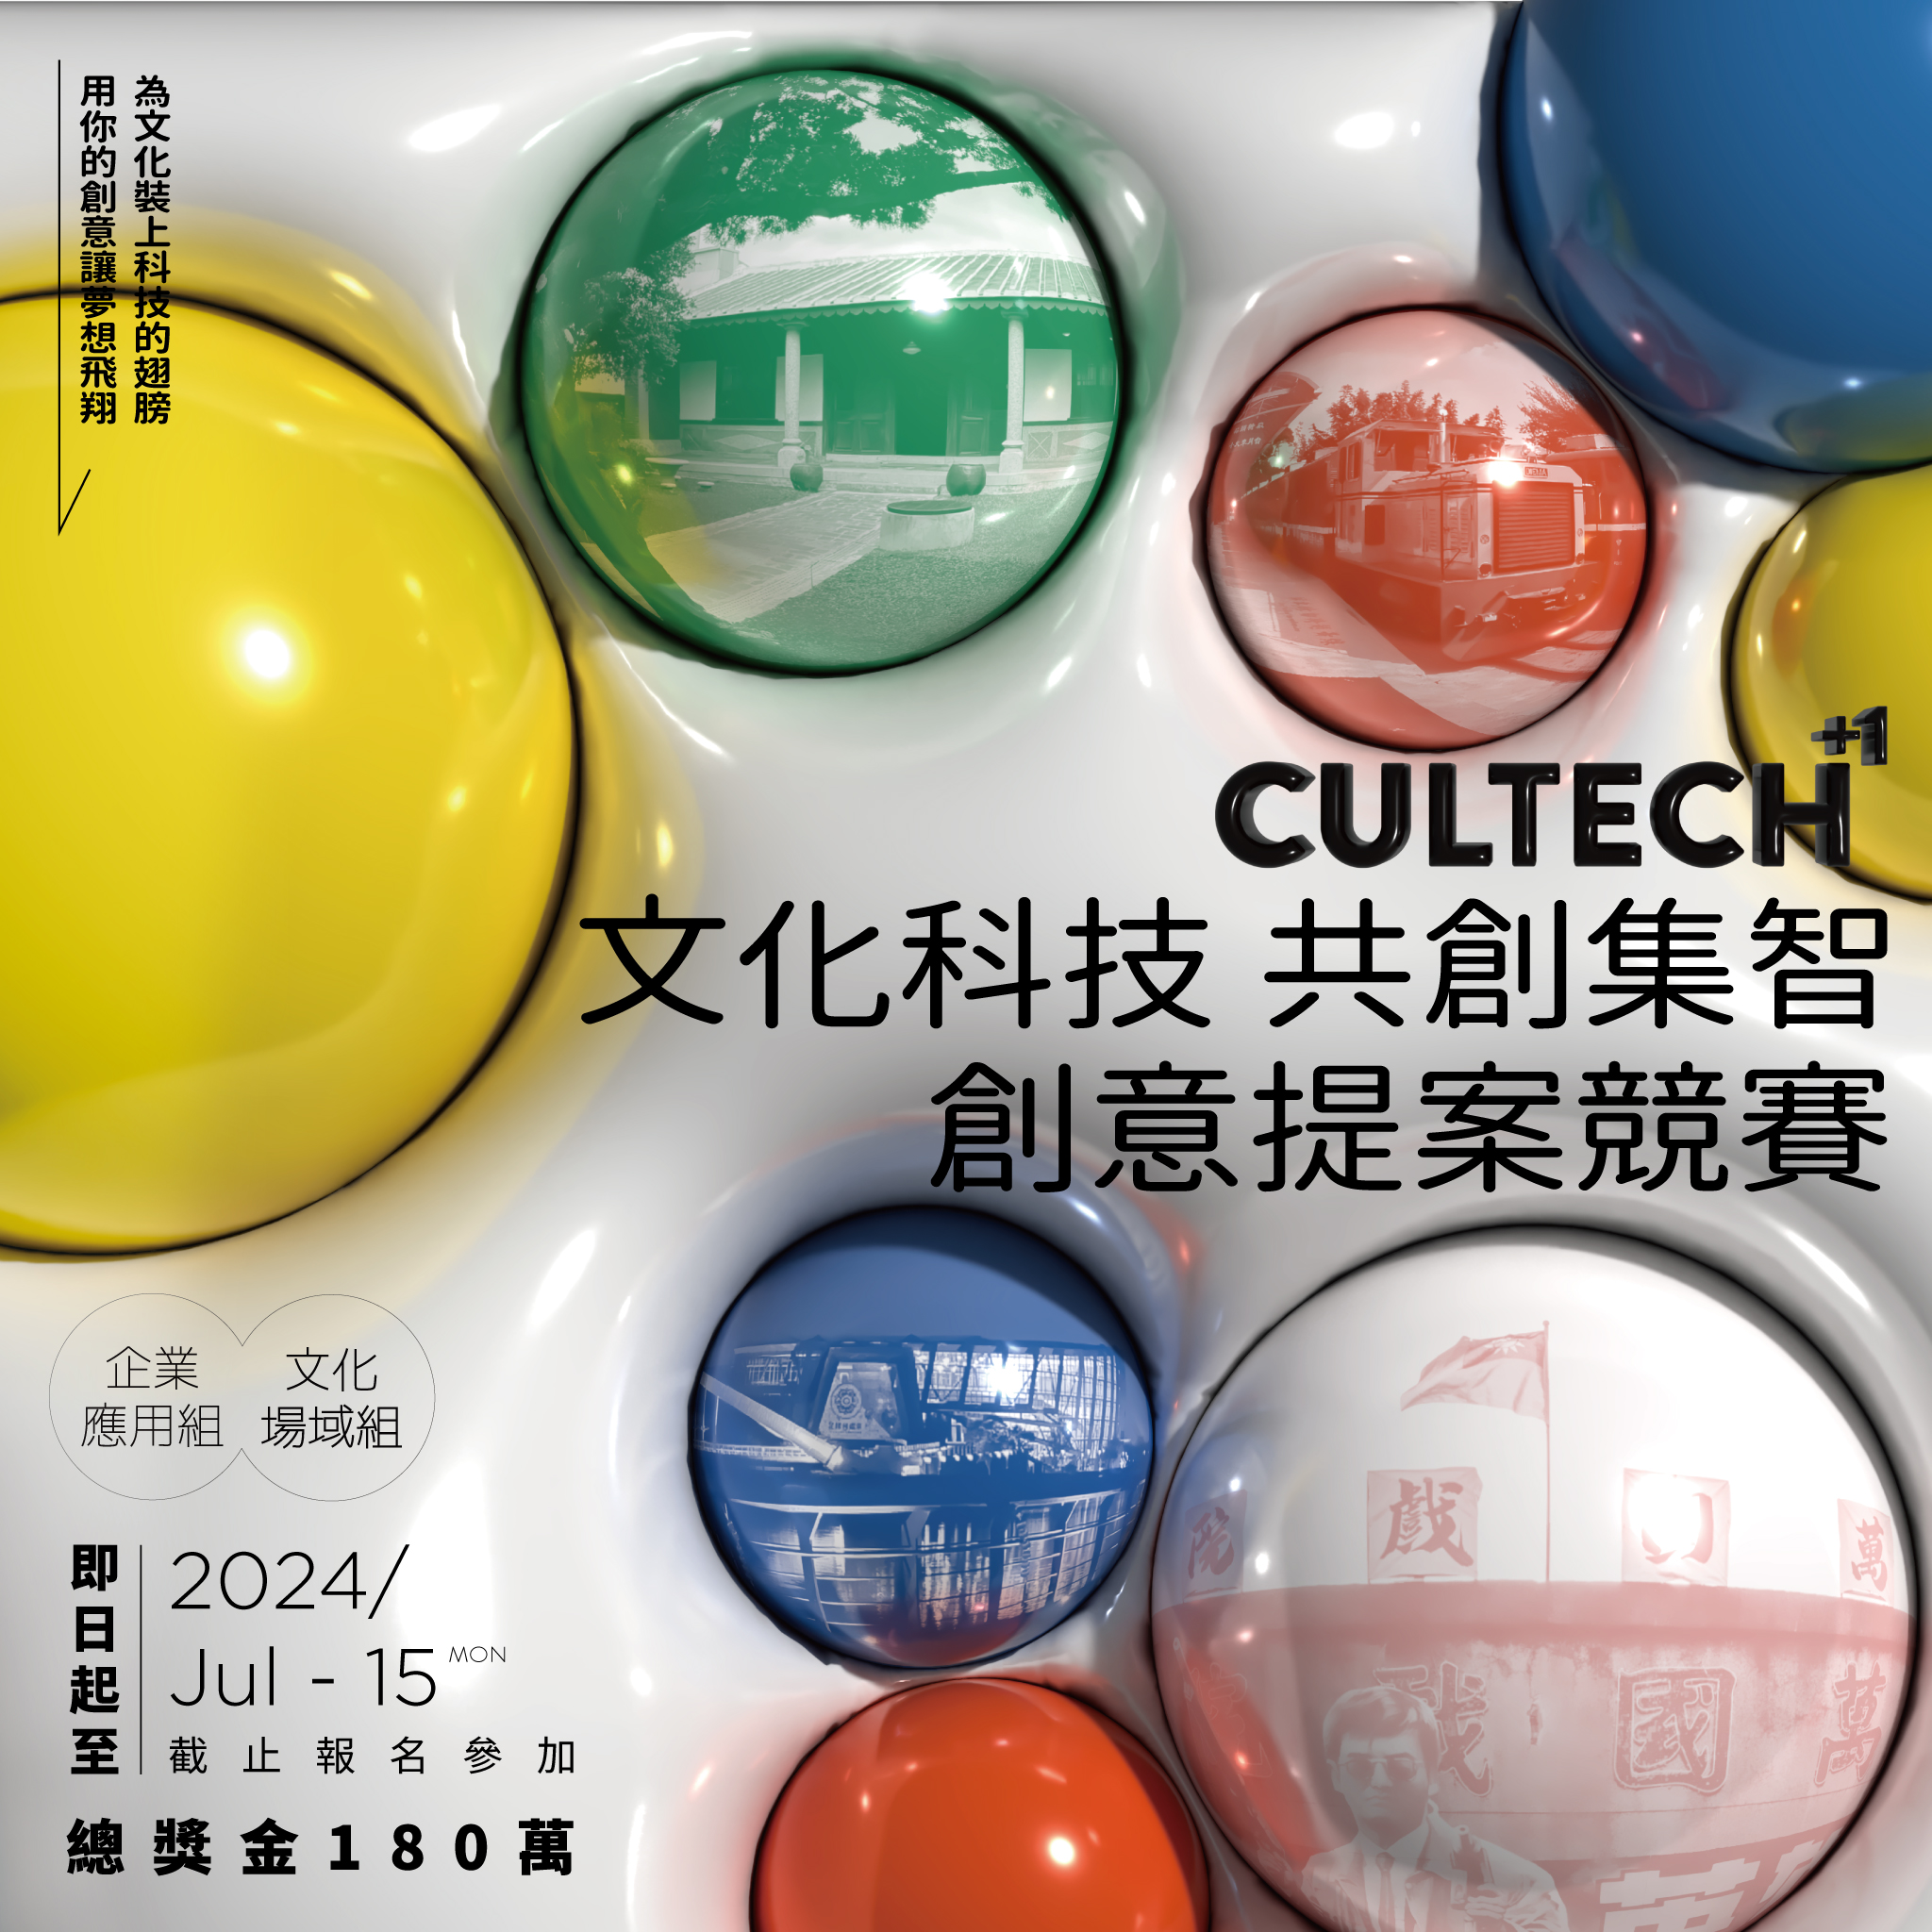 CulTech +1 文化科技 共創集智創意...